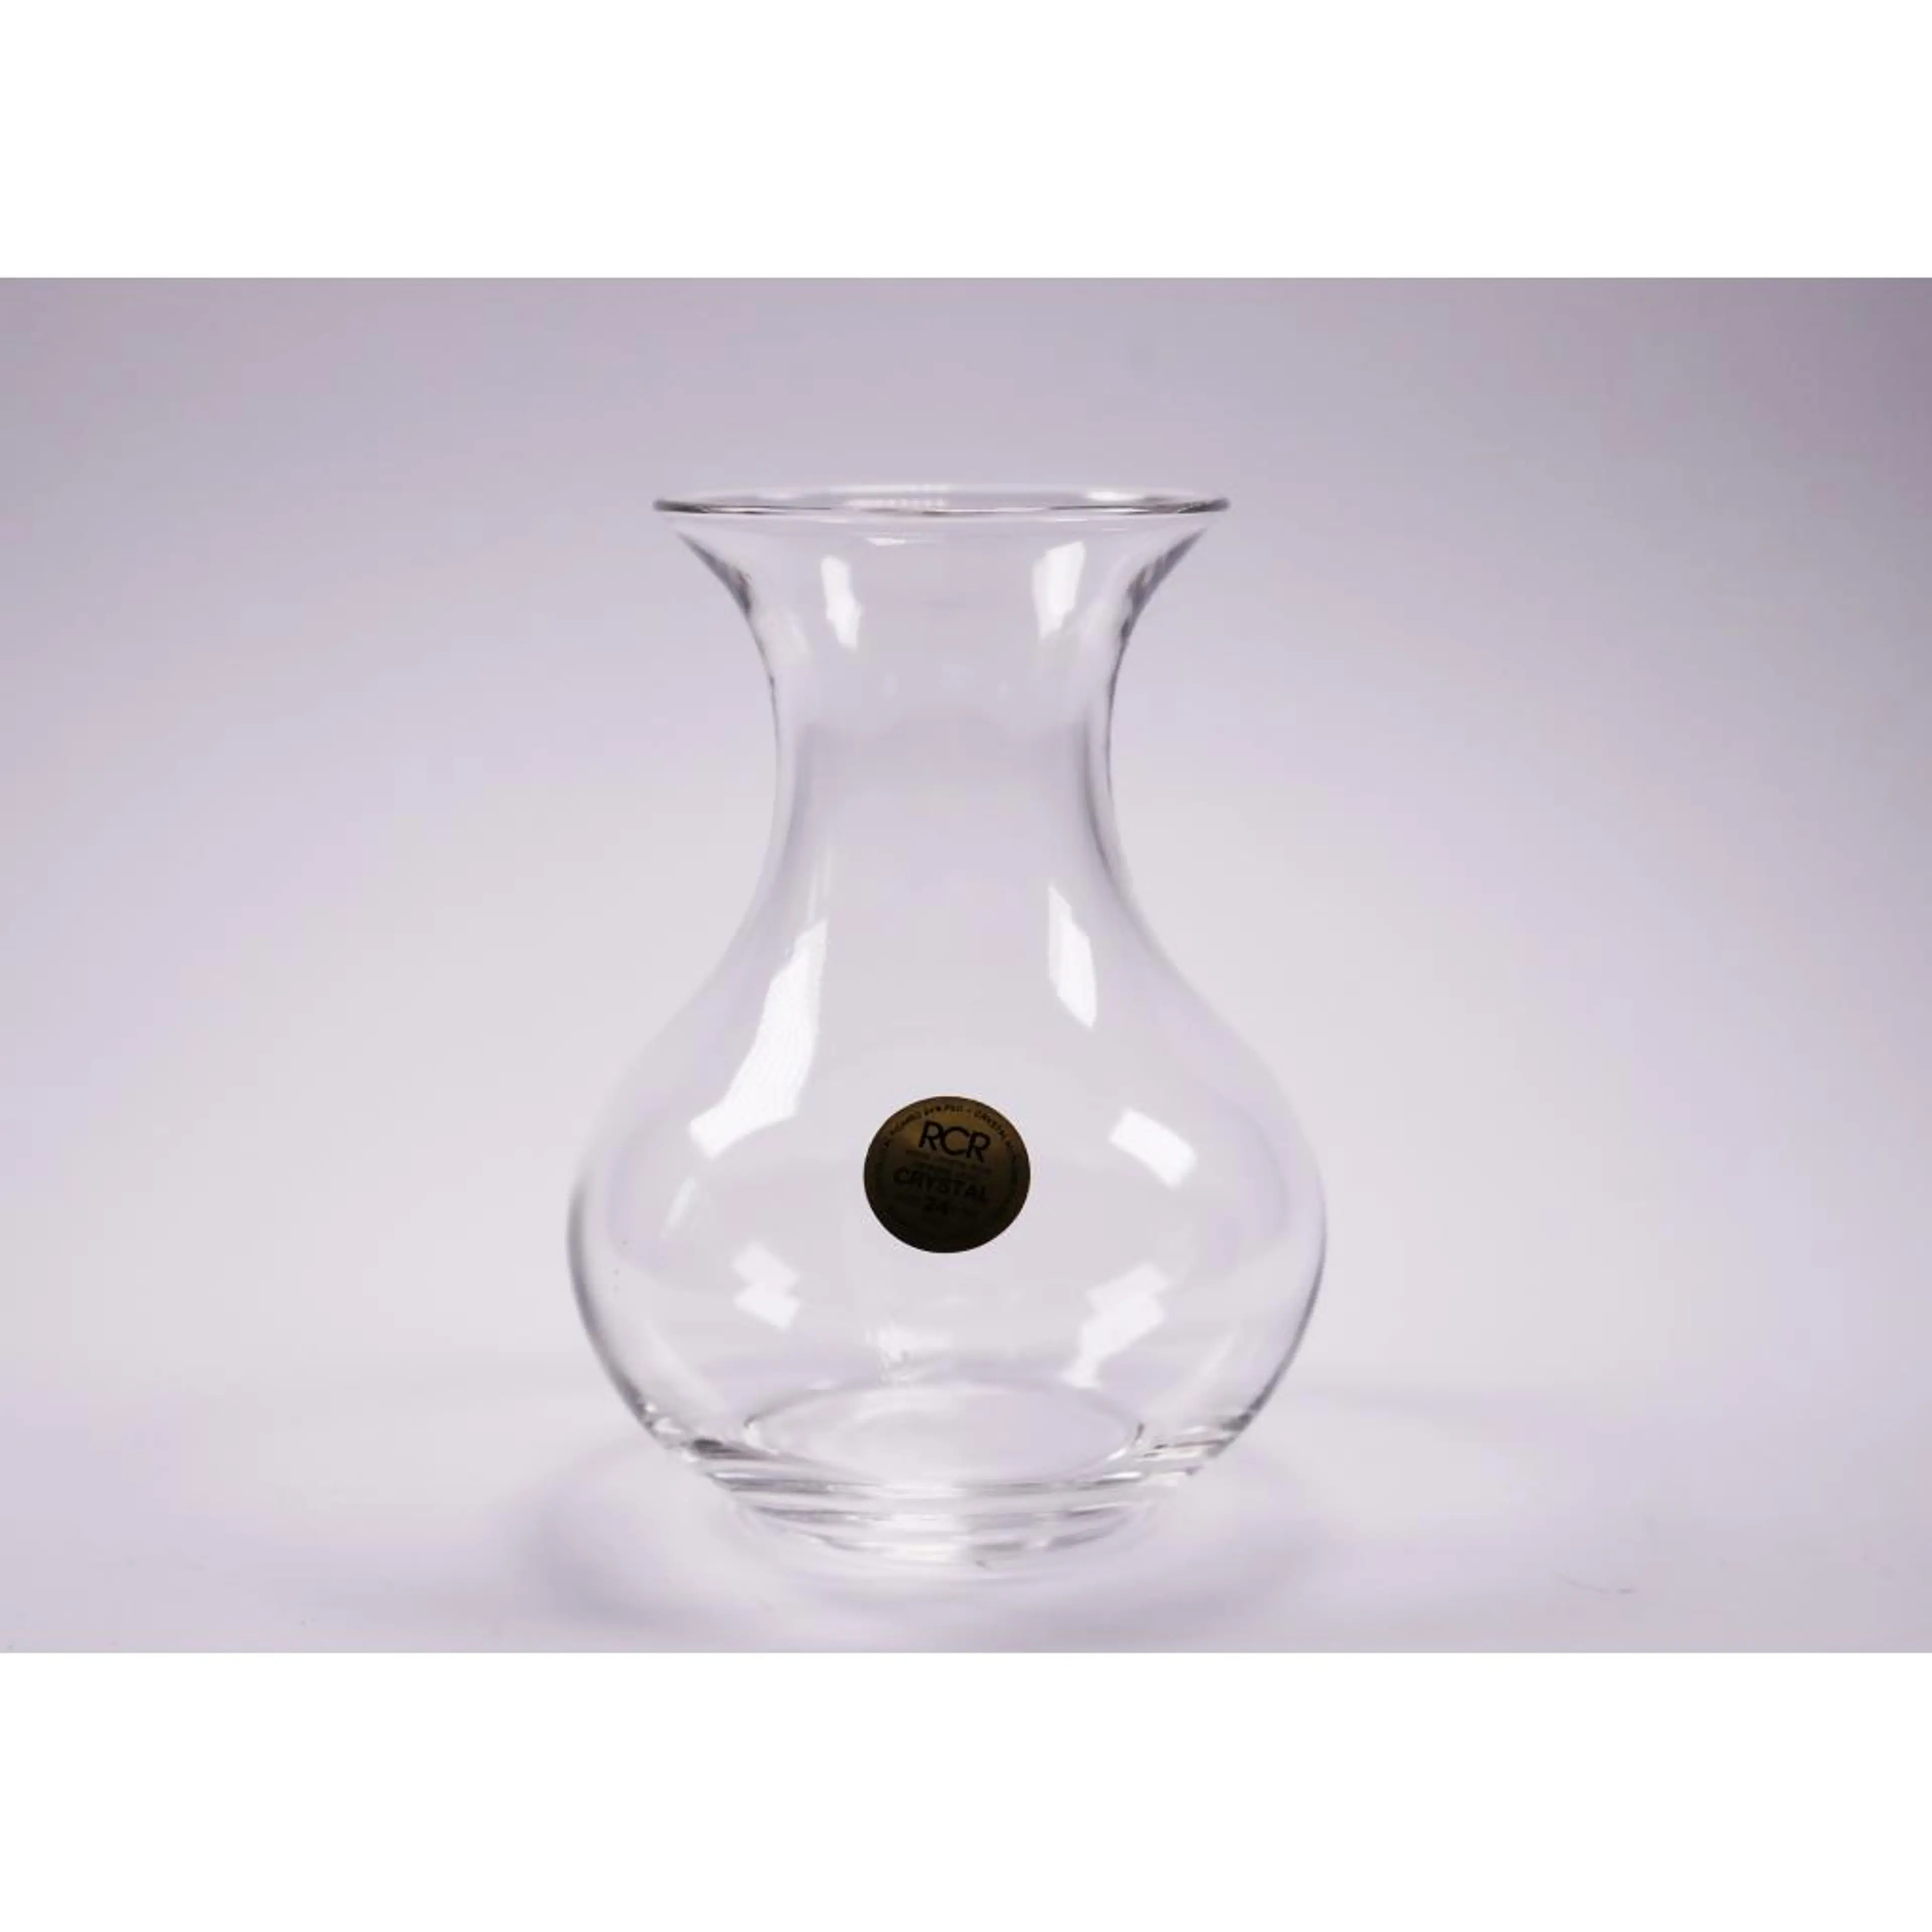 Glass Vase By Rcr